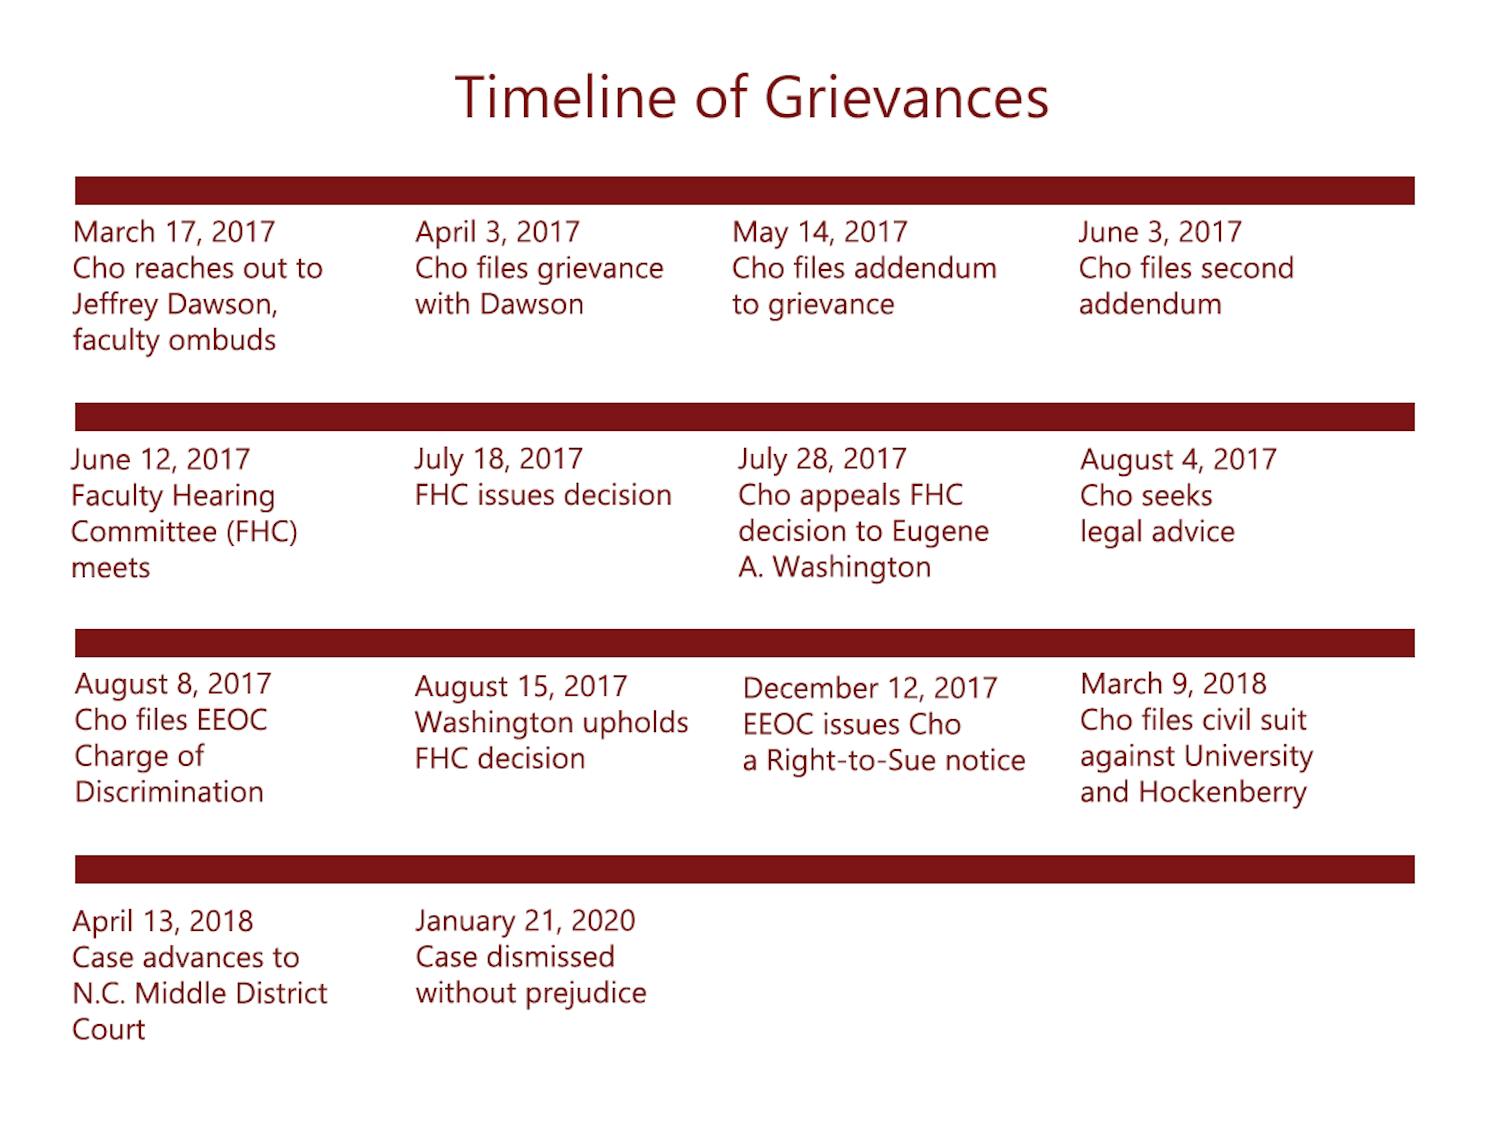 complaint timeline updated 2-24.png